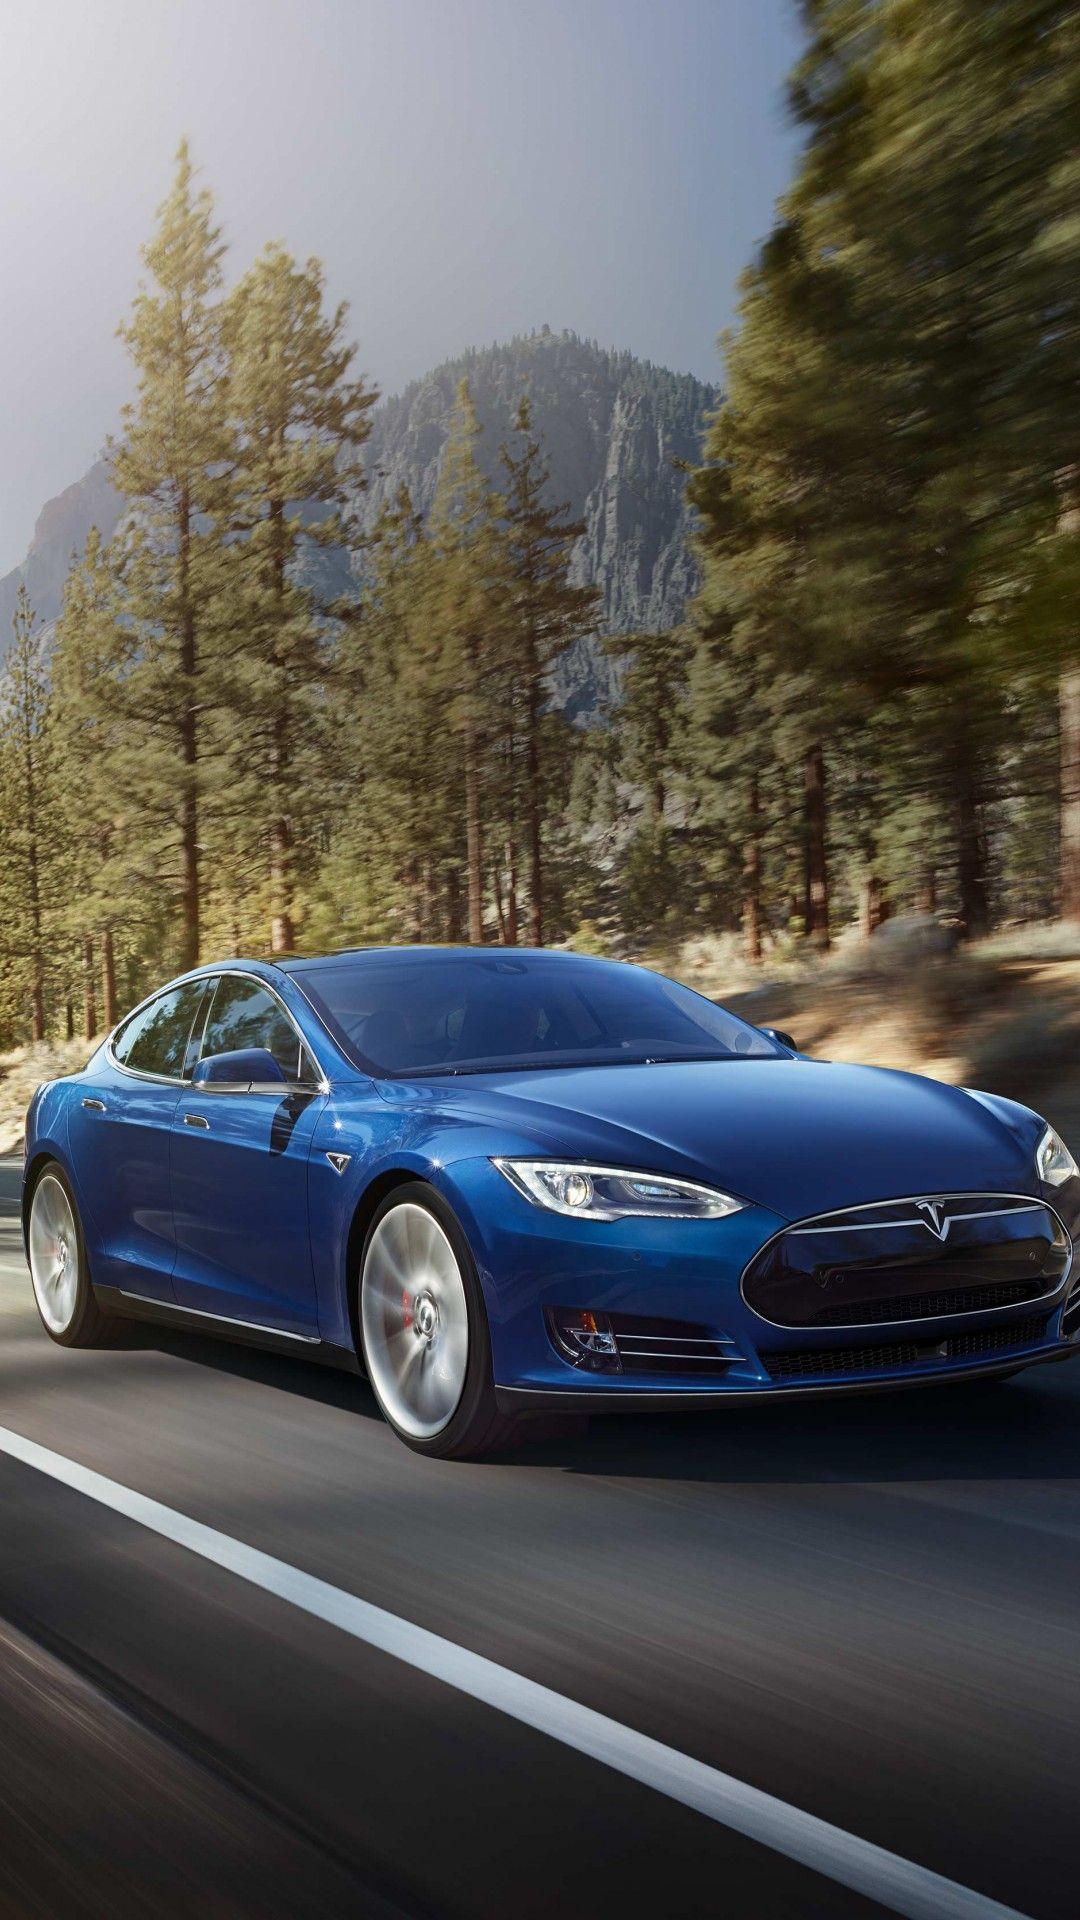 Tesla Model S wallpaper for iPhone. Dizi&Film. Tesla car models